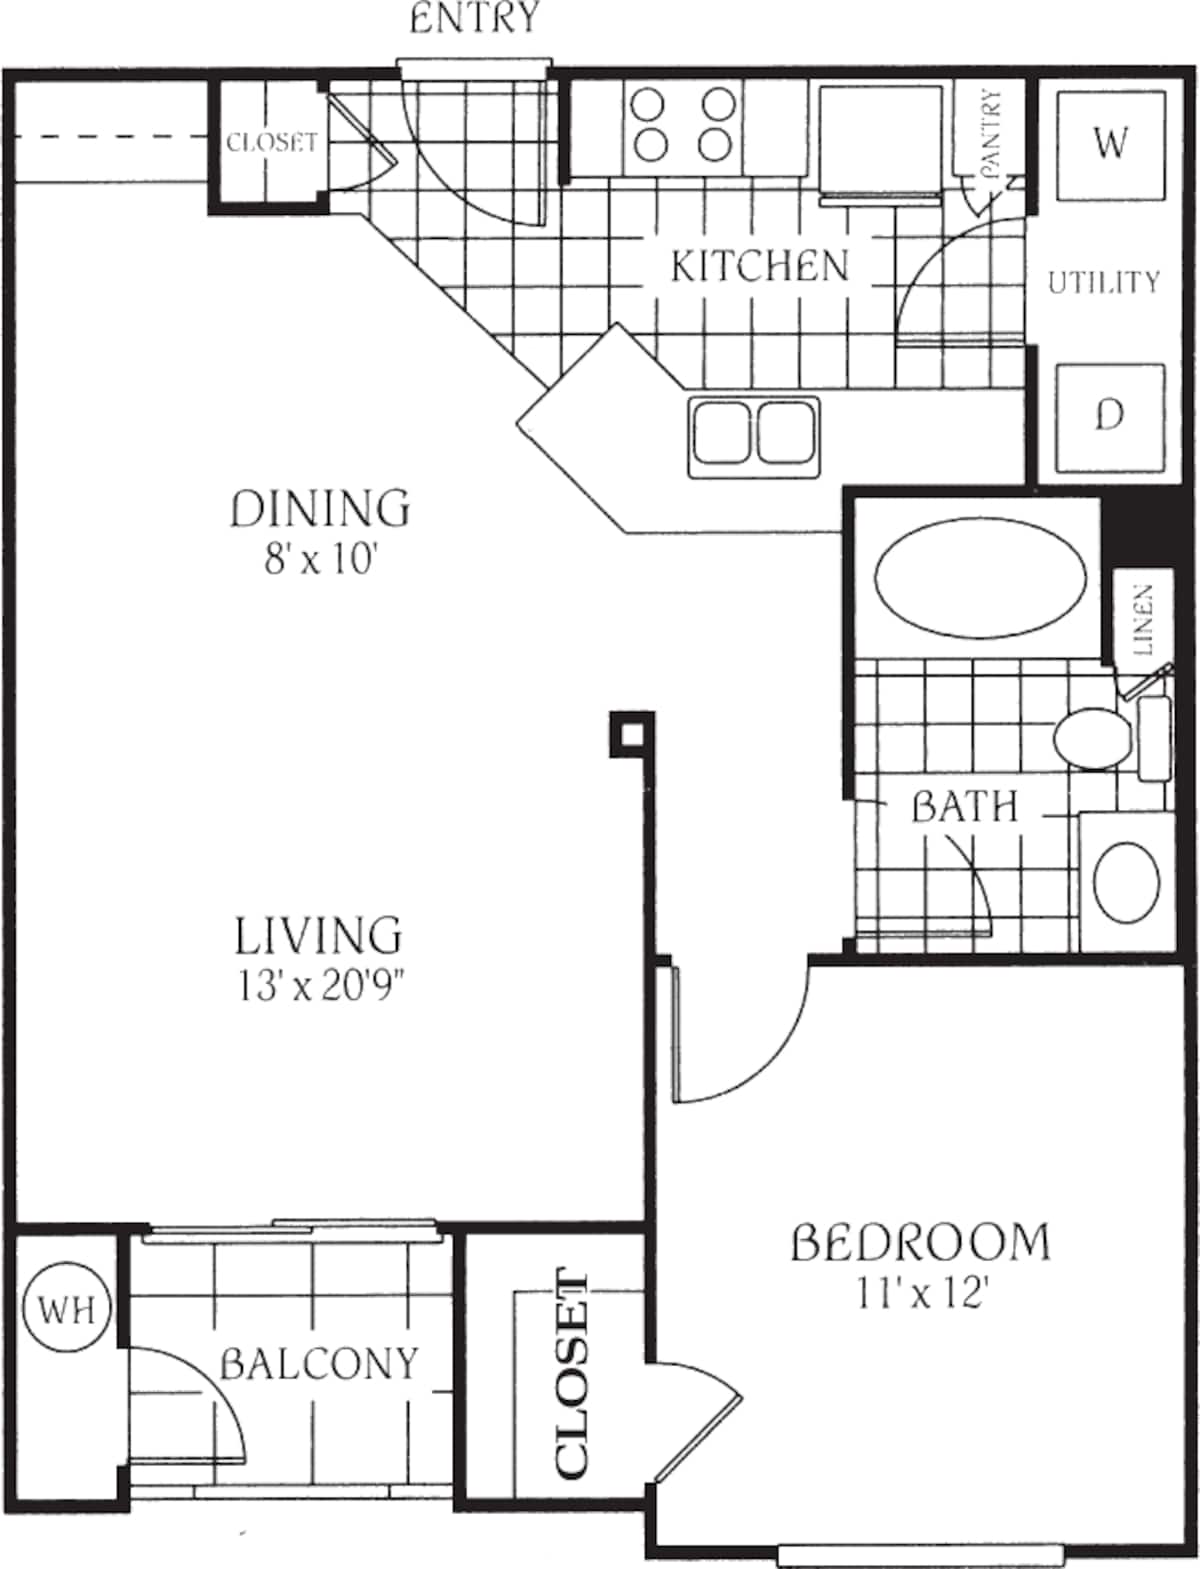 Floorplan diagram for The Jade, showing 1 bedroom